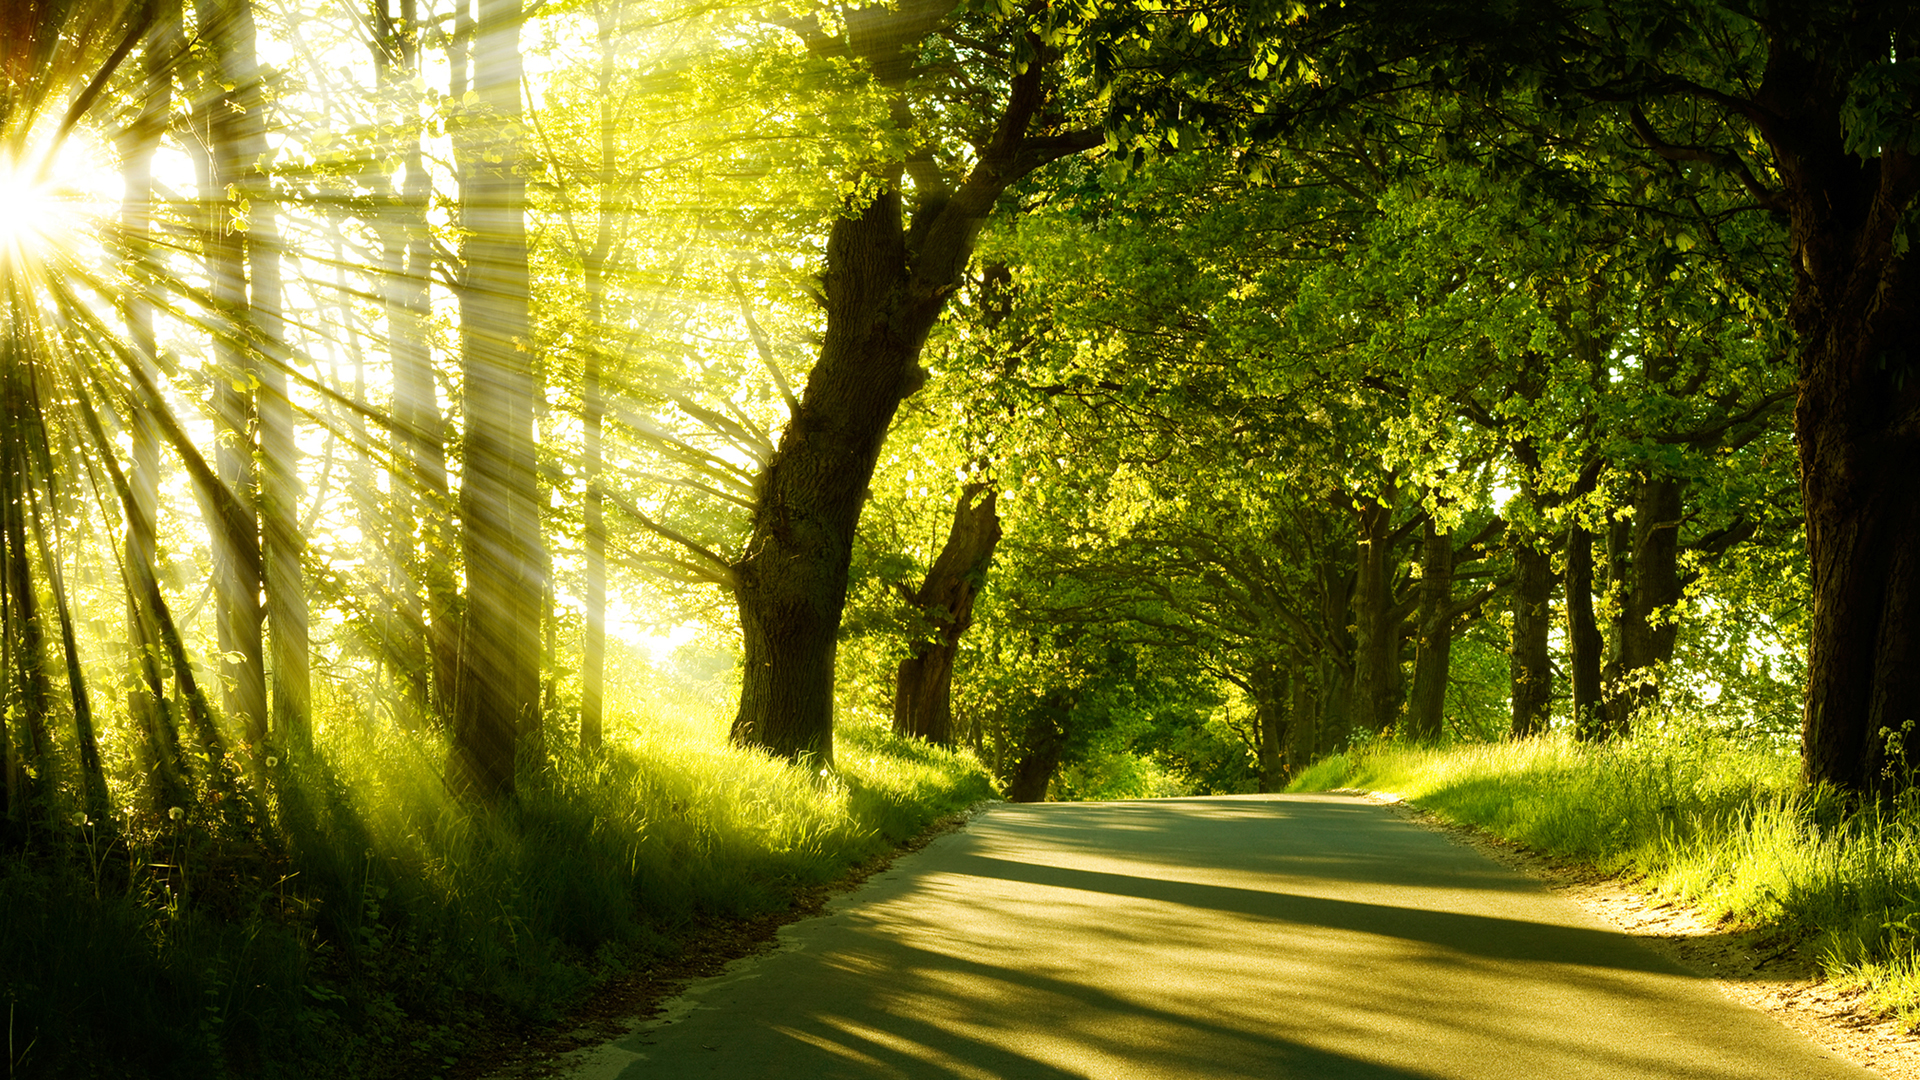 landscapes, nature, trees, sunlight, roads - desktop wallpaper